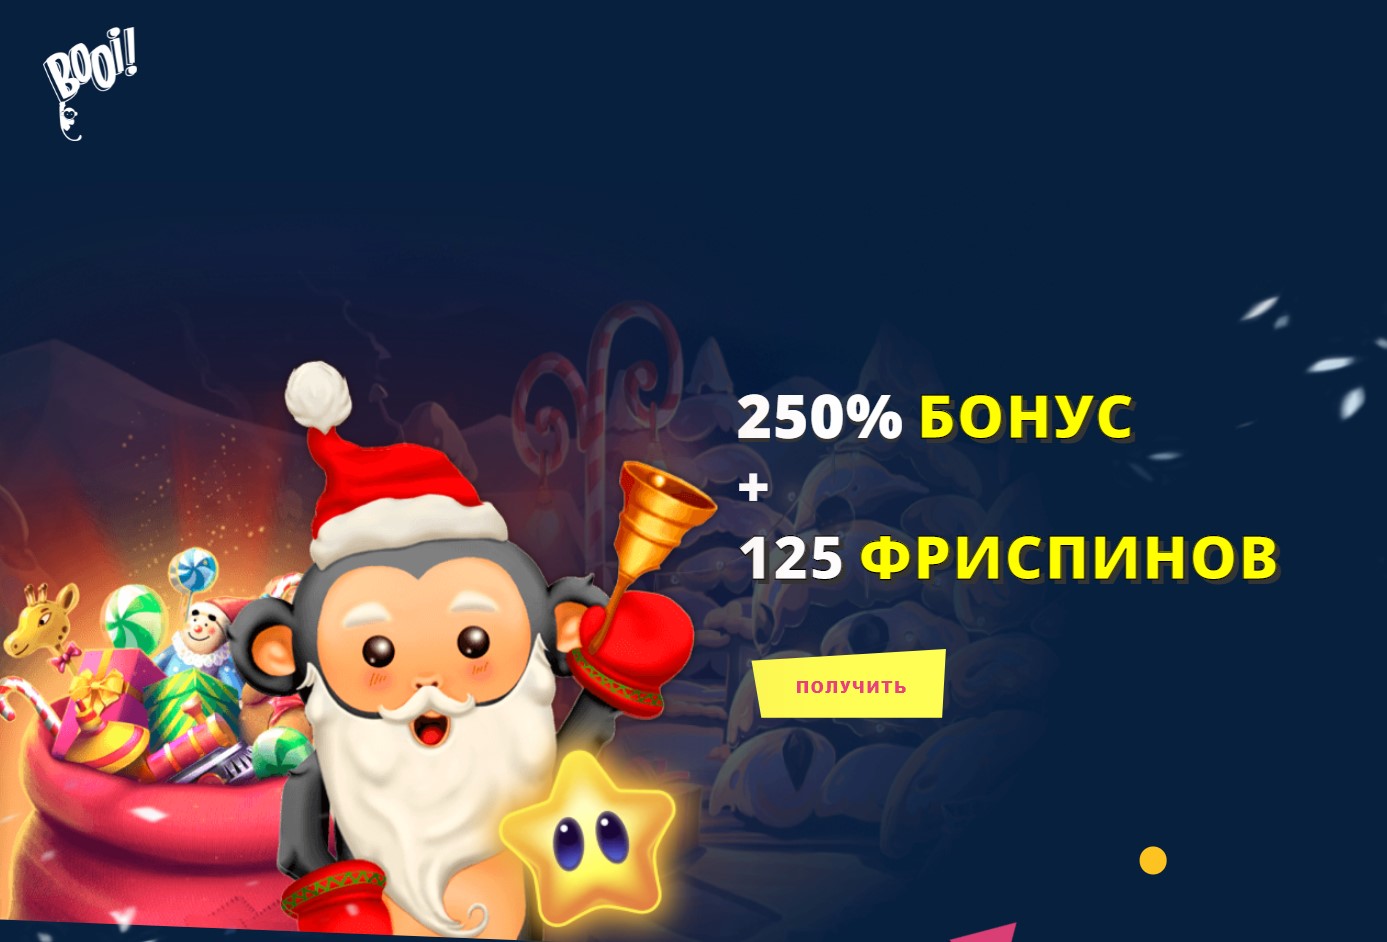 Booi casino 250%БОНУС + 125 ФРИСПИНОВ